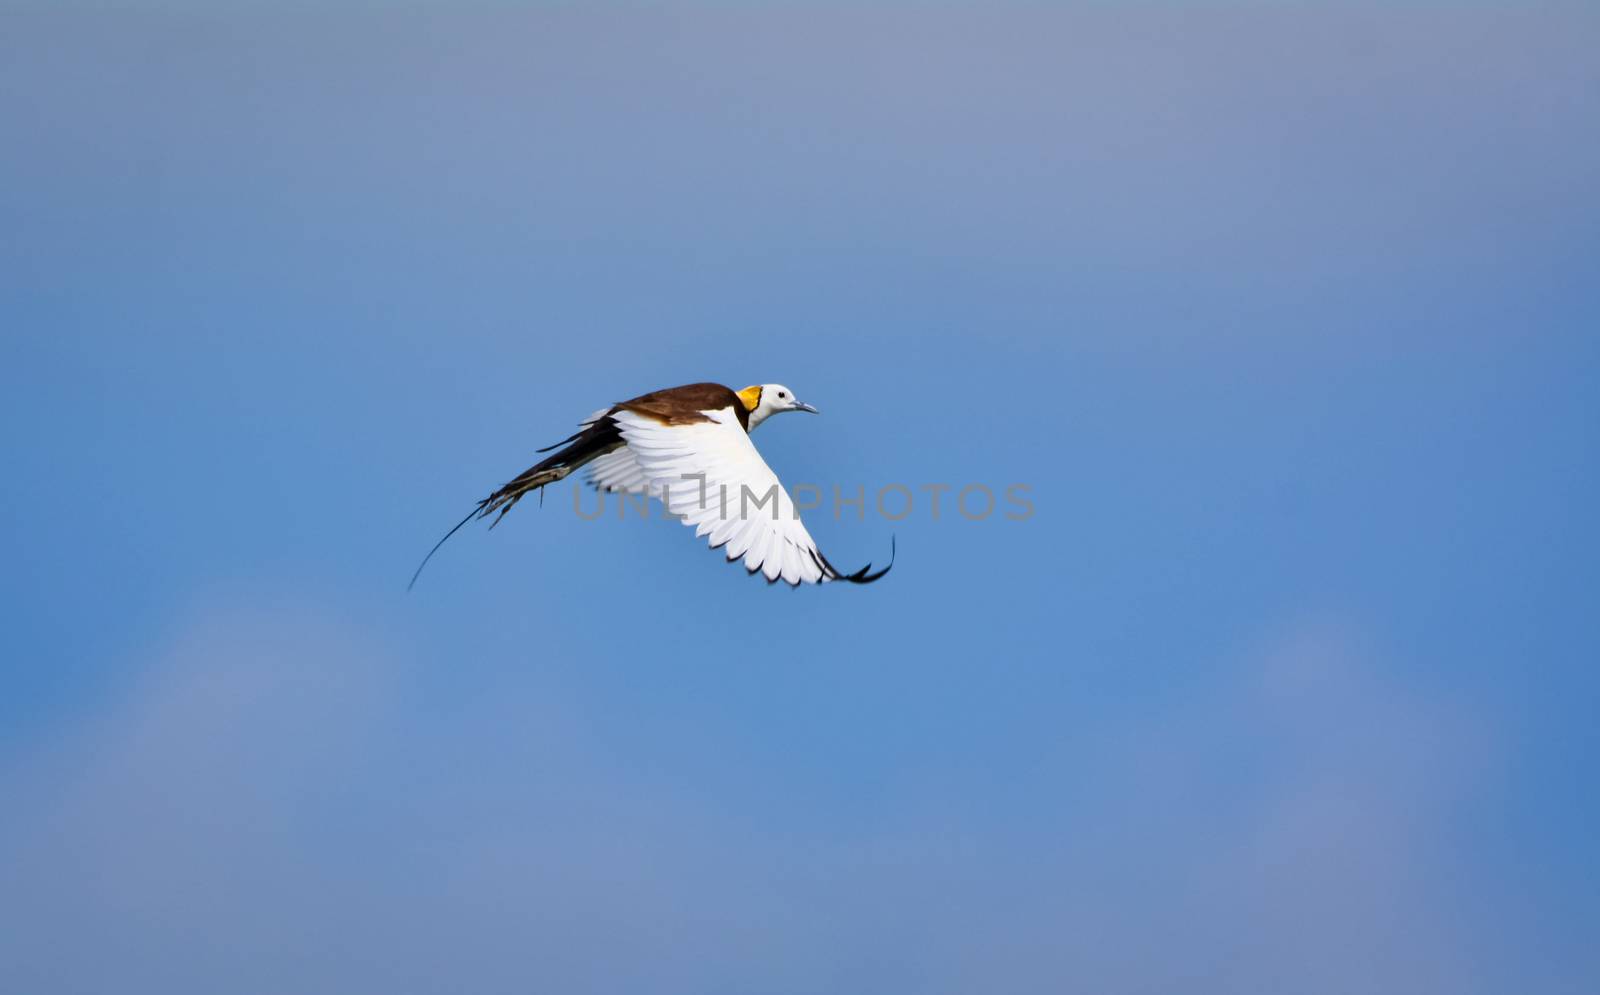 Pheasant-tailed jacana flying over green farm field by rkbalaji